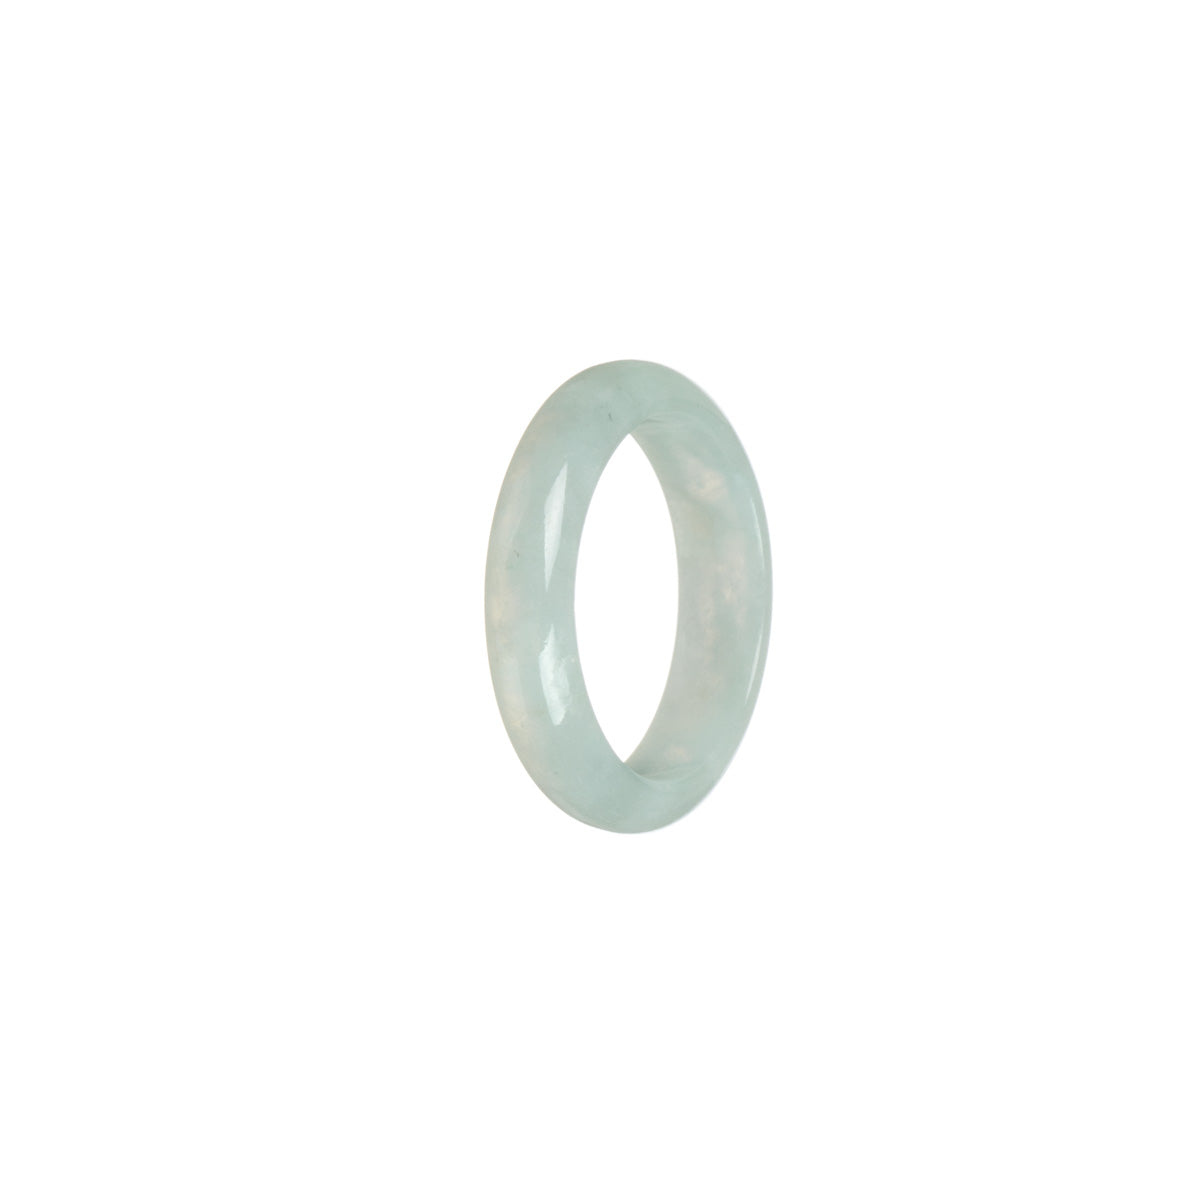 Certified White Burmese Jade Ring- Size S 1/2